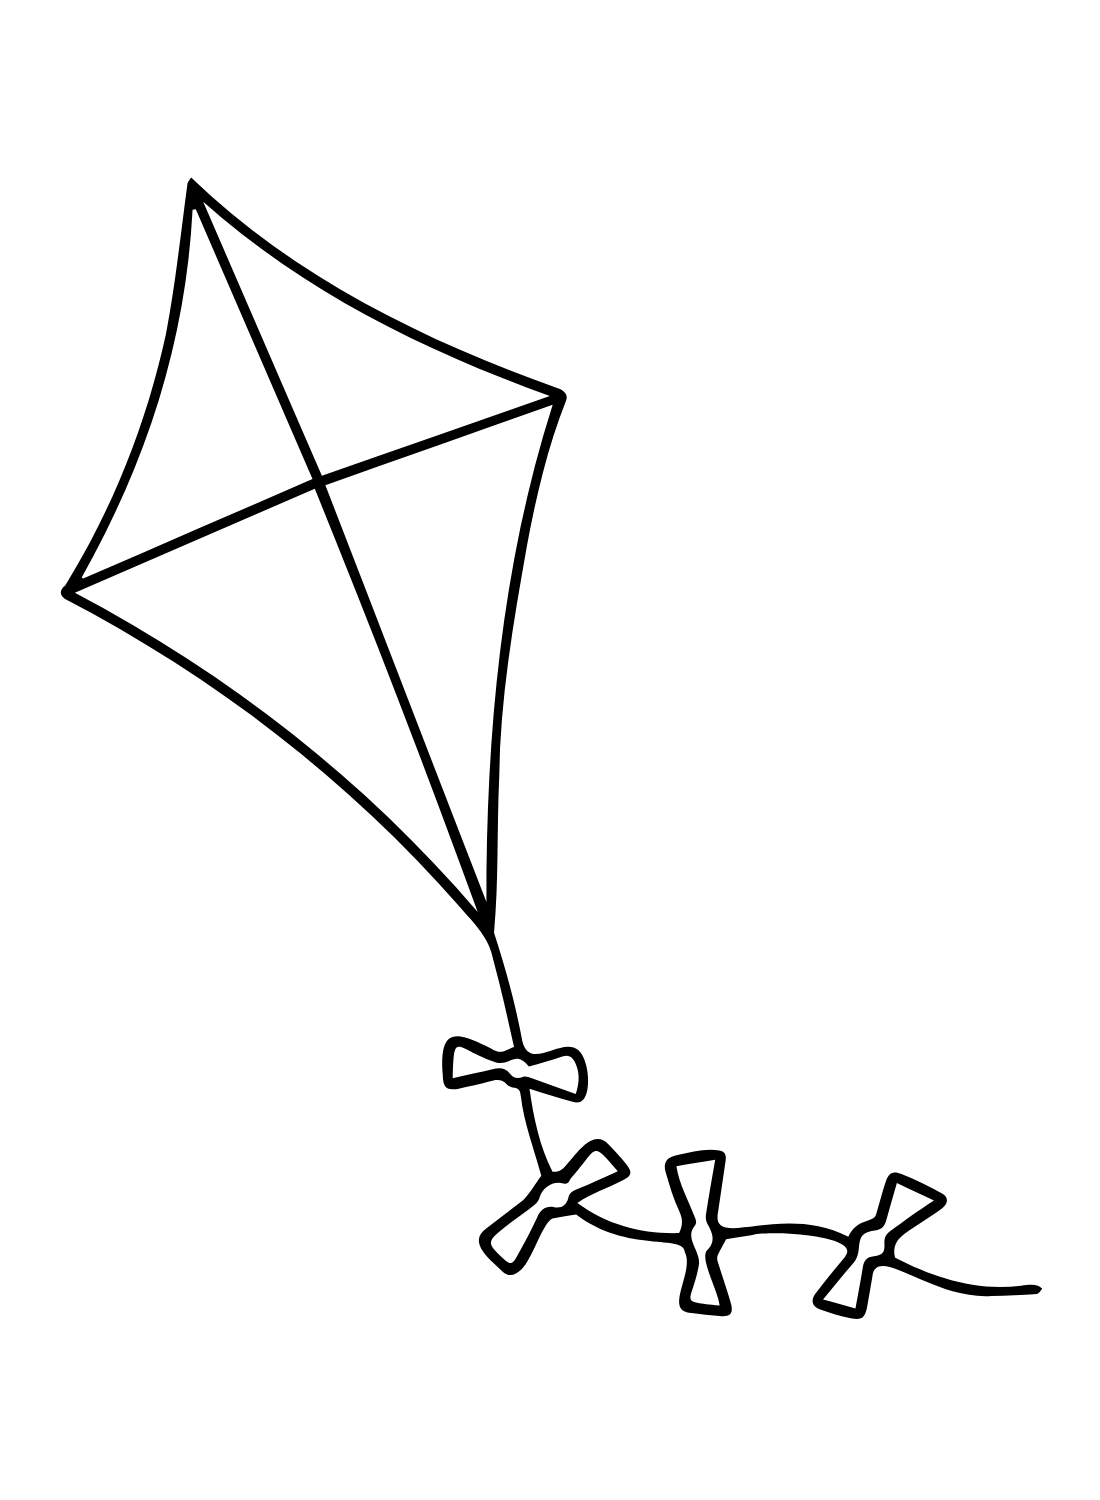 Easy Kite Drawing